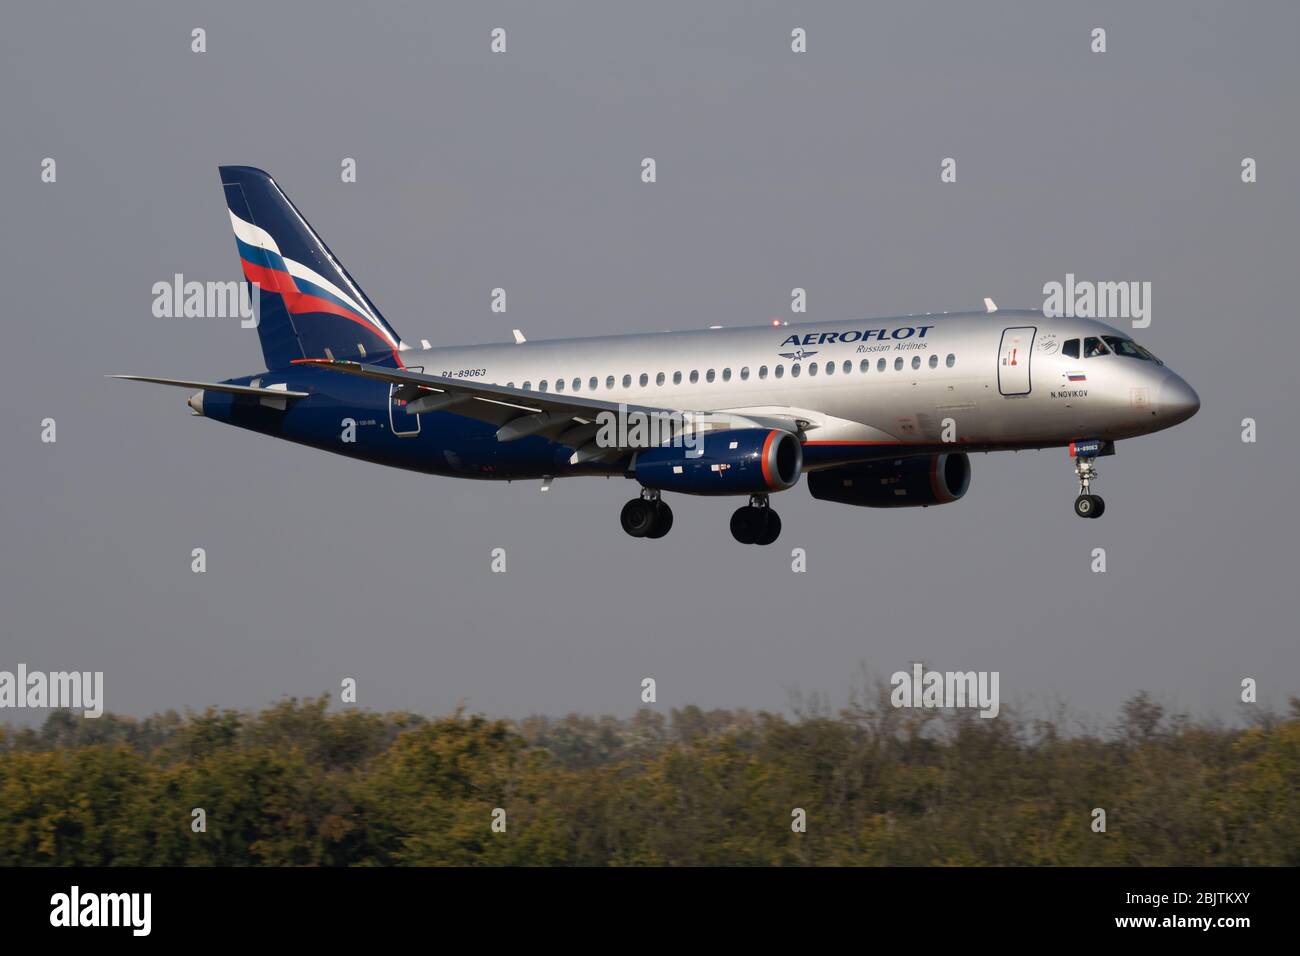 Budapest / Hungary - October 7, 2018: Aeroflot Sukhoi Superjet SSJ RA-89063 passenger plane arrival and landing at Budapest Airport Stock Photo